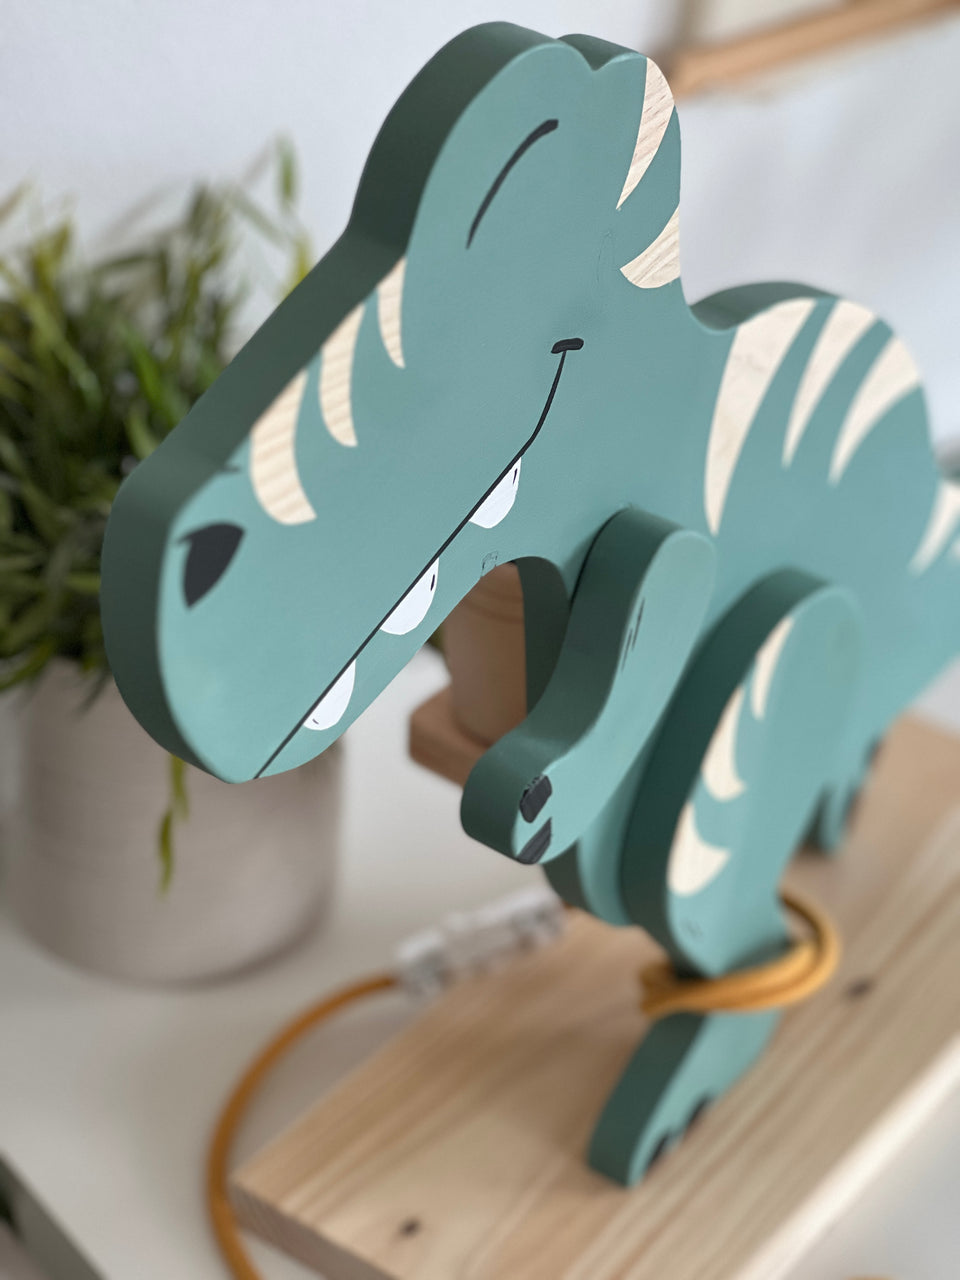 Candeeiro "Dinossauro Rex" - Dinosaur Rex table lamp